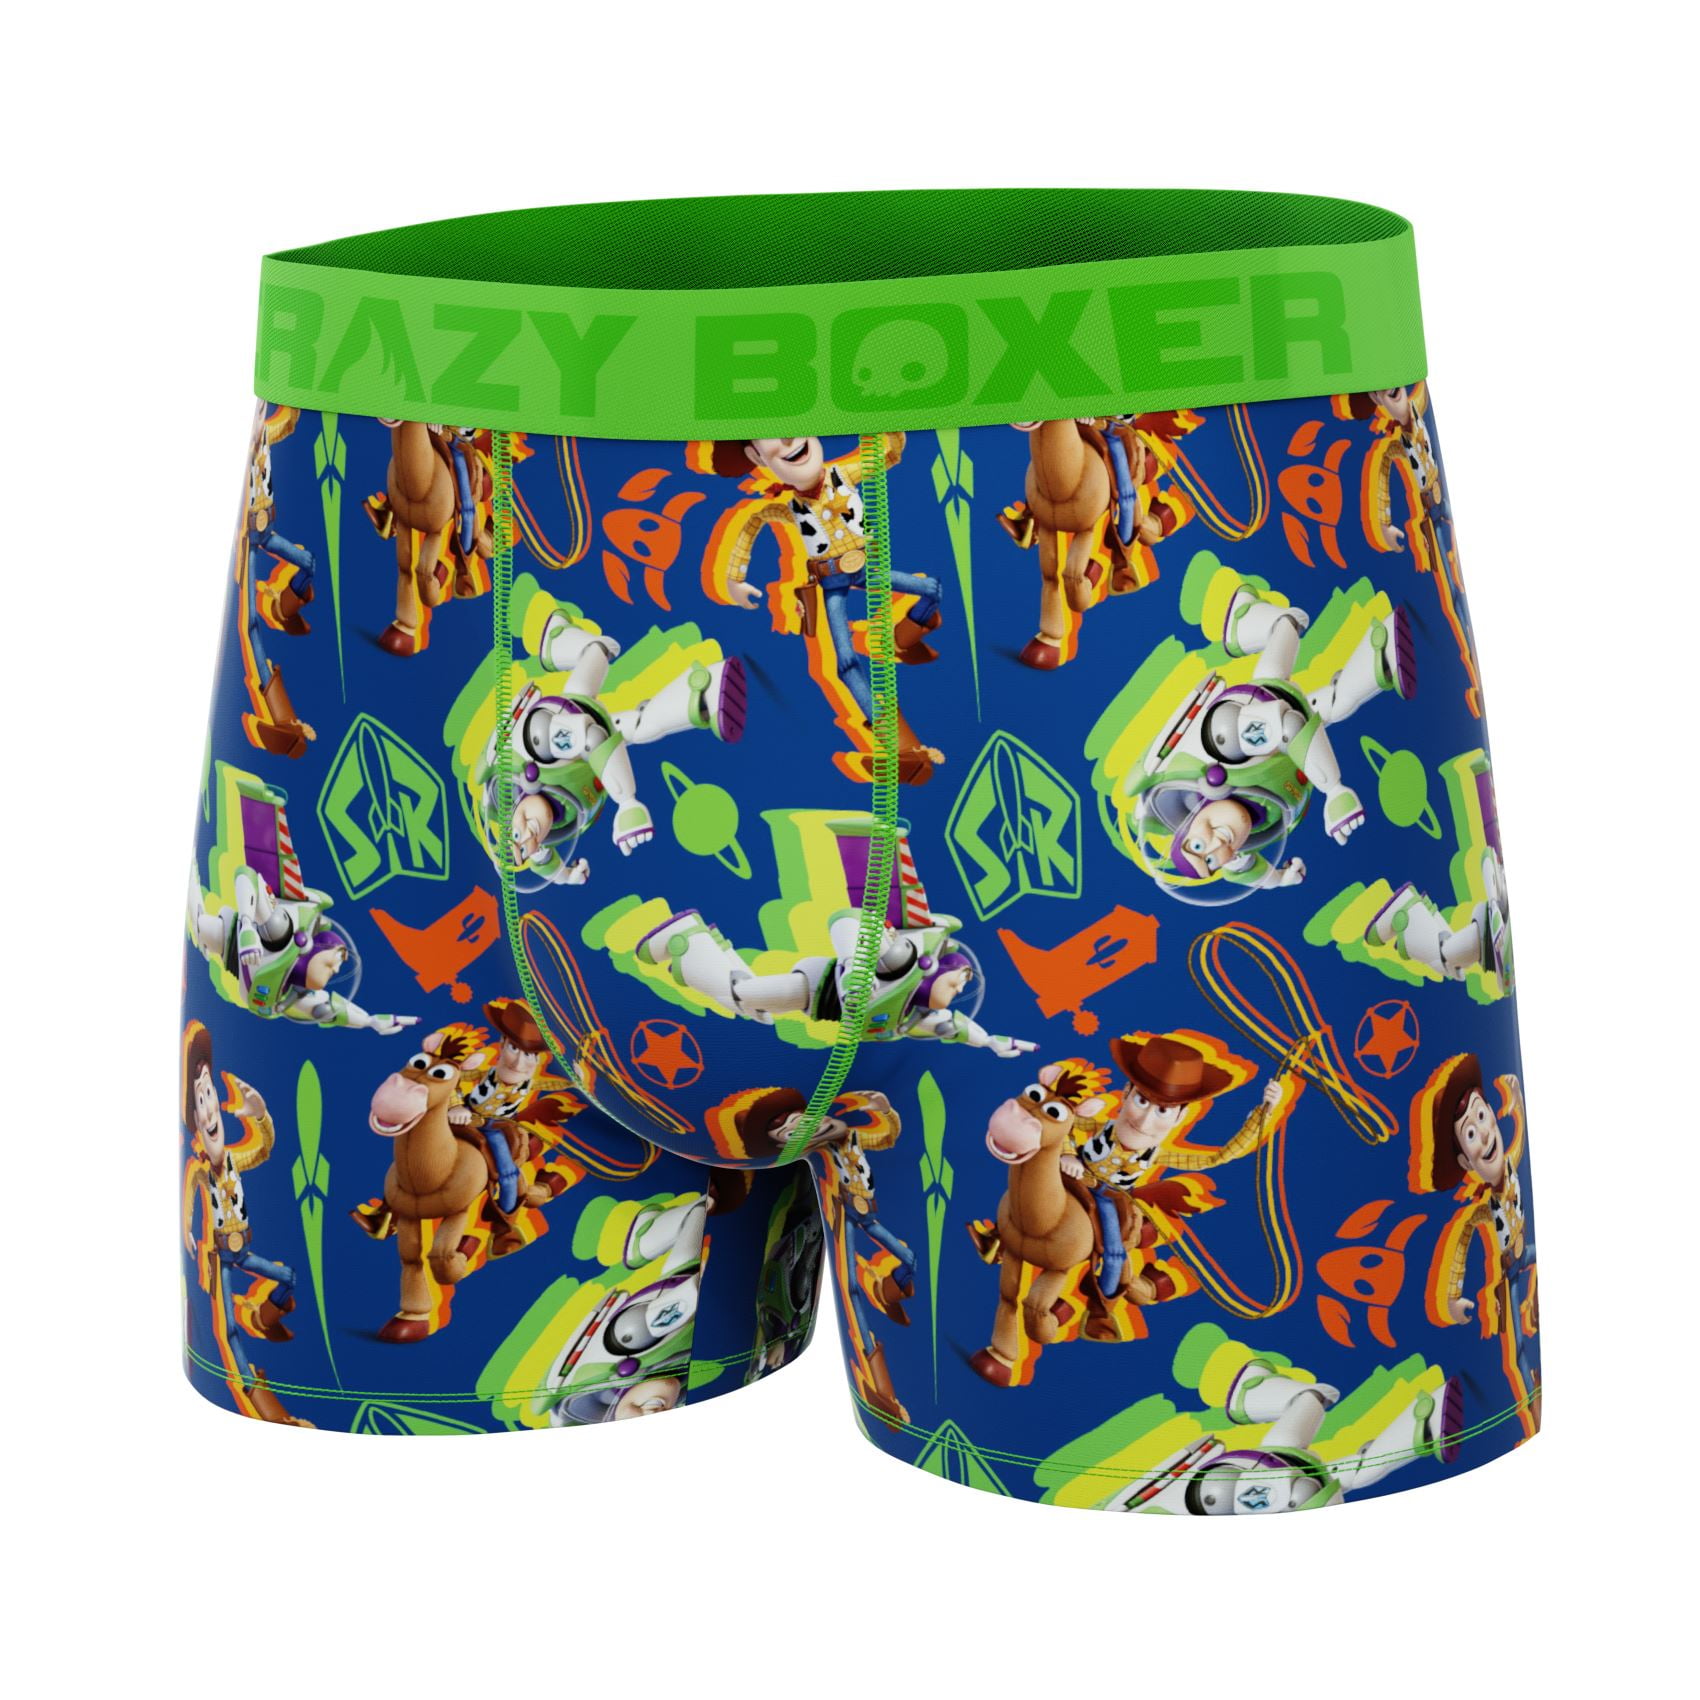 CRAZYBOXER Men's Underwear Toy Story Resistant Perfect fit